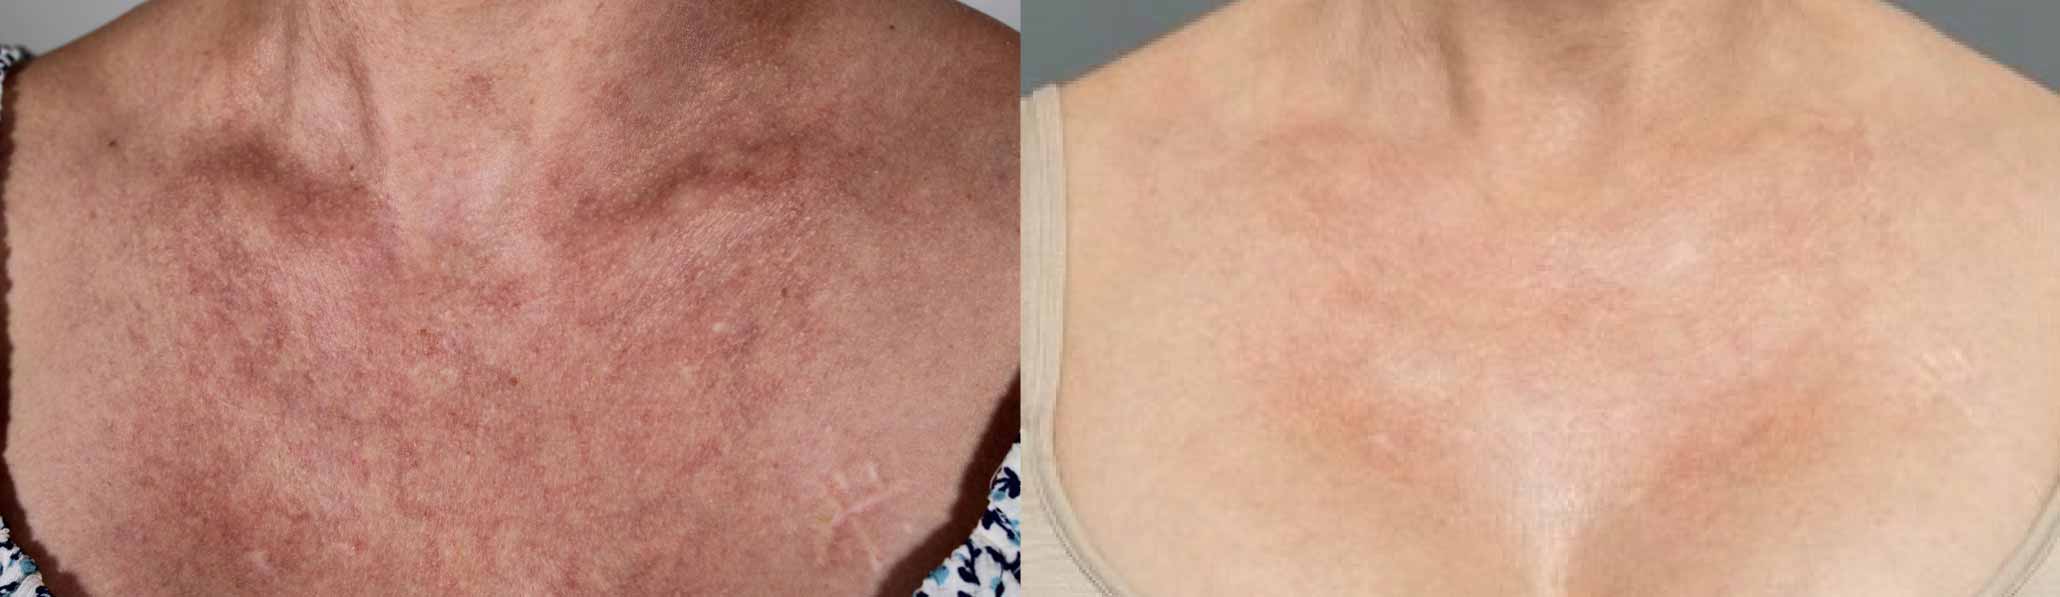 BBL chest vein removal cutis dermatology